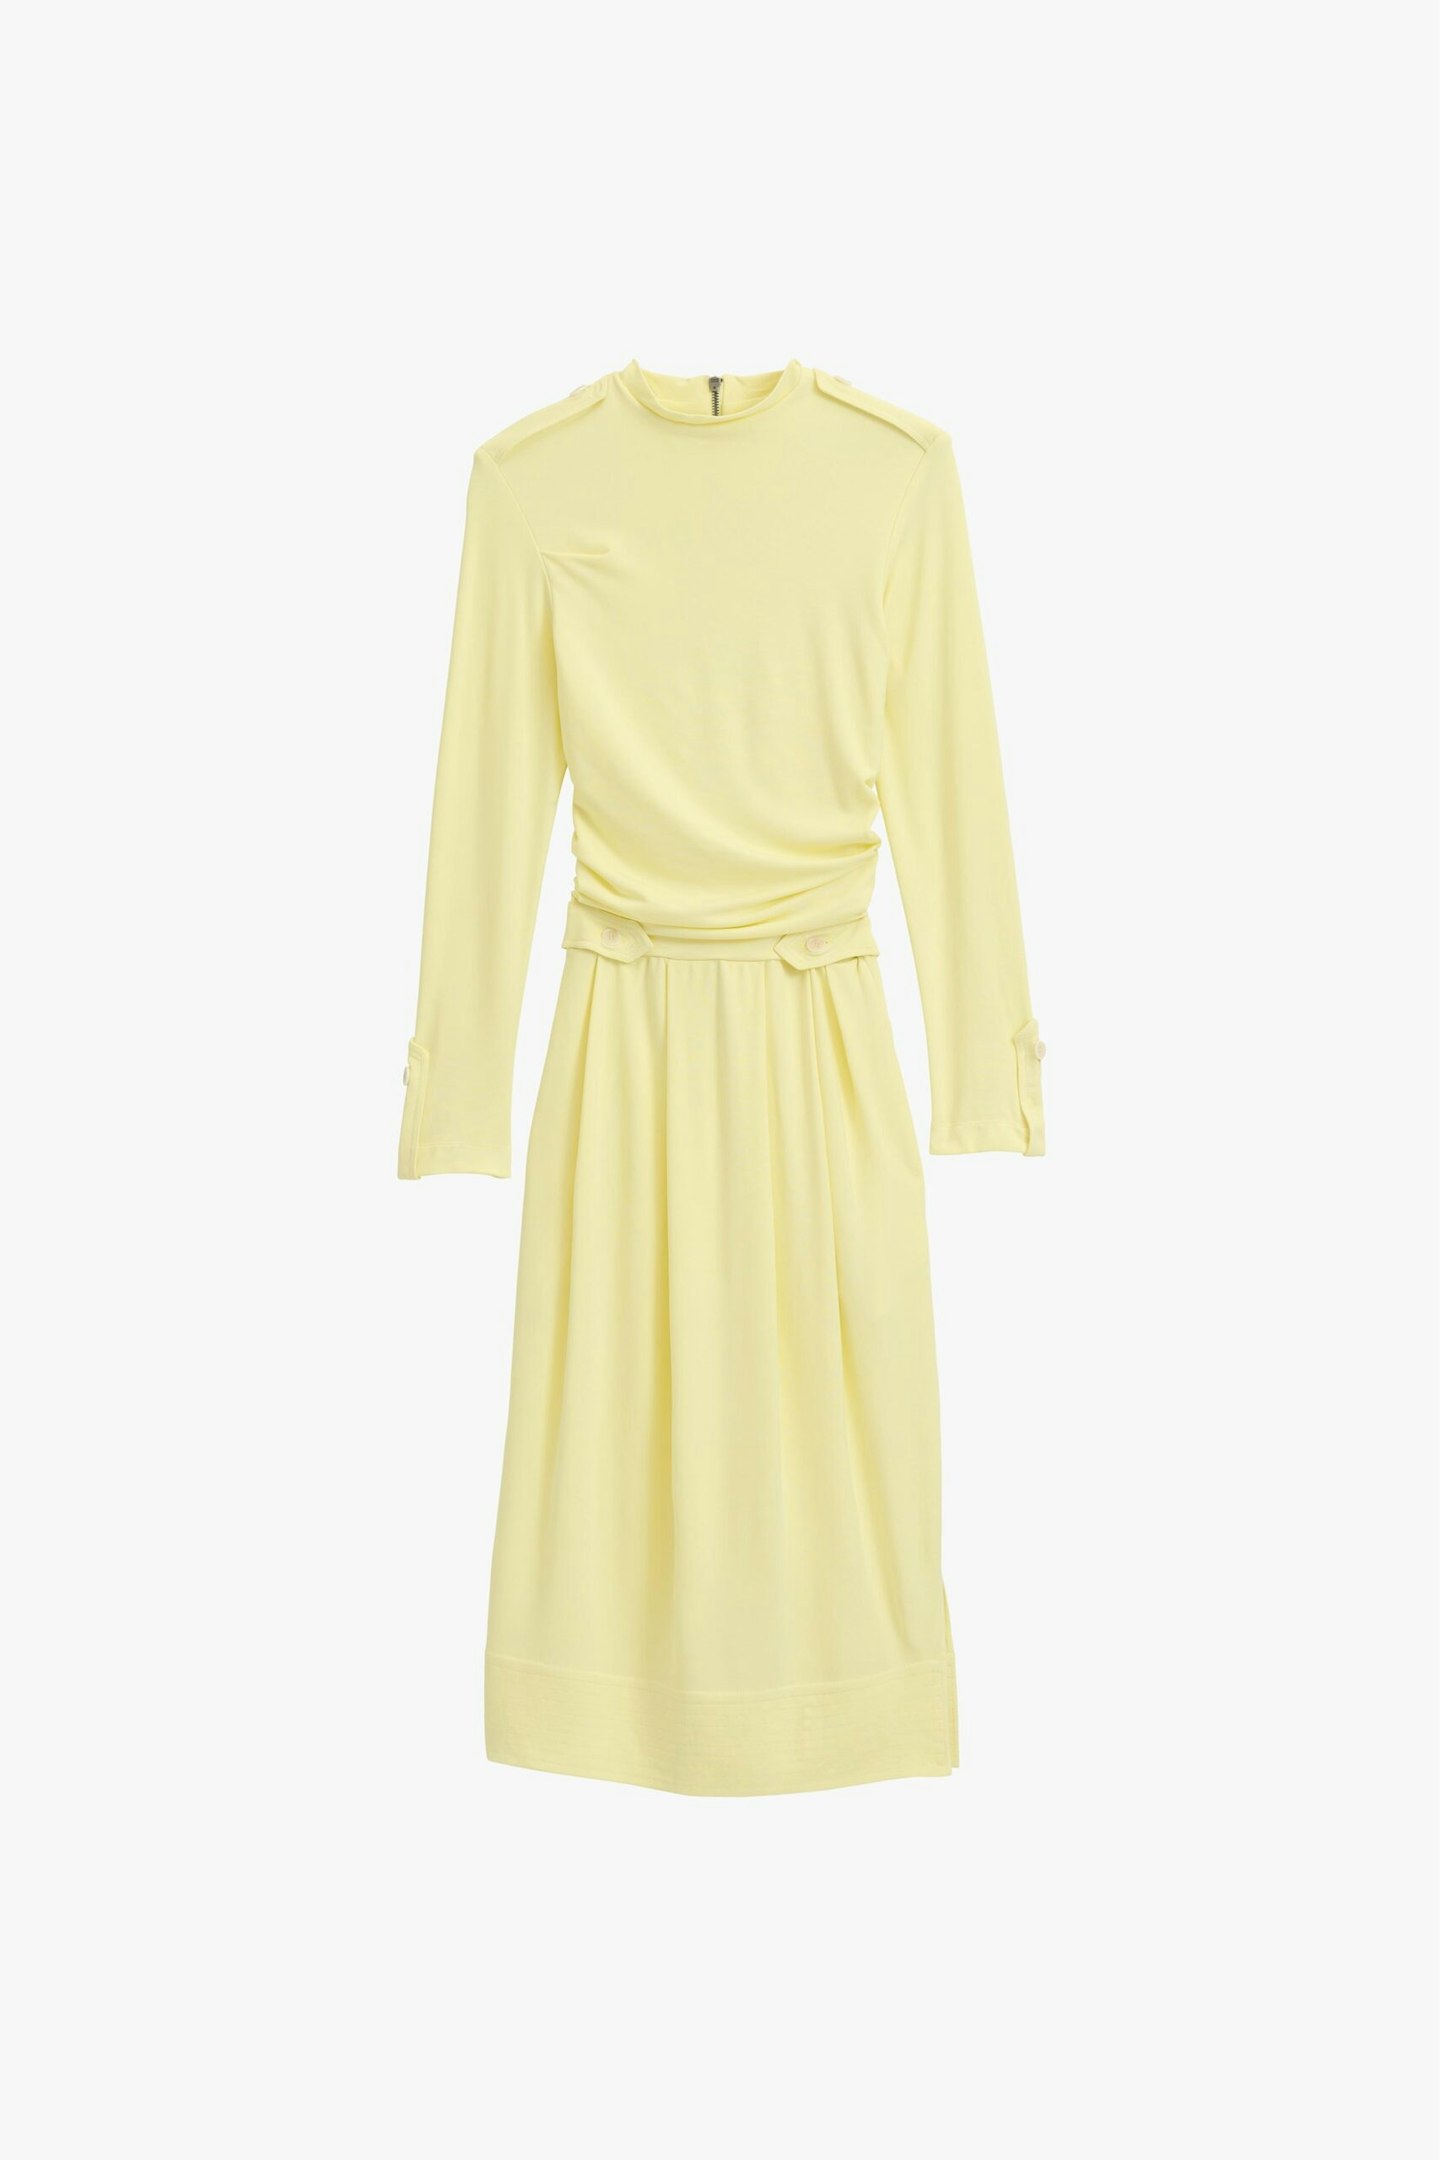 Zara, Viscose-Blend Dress